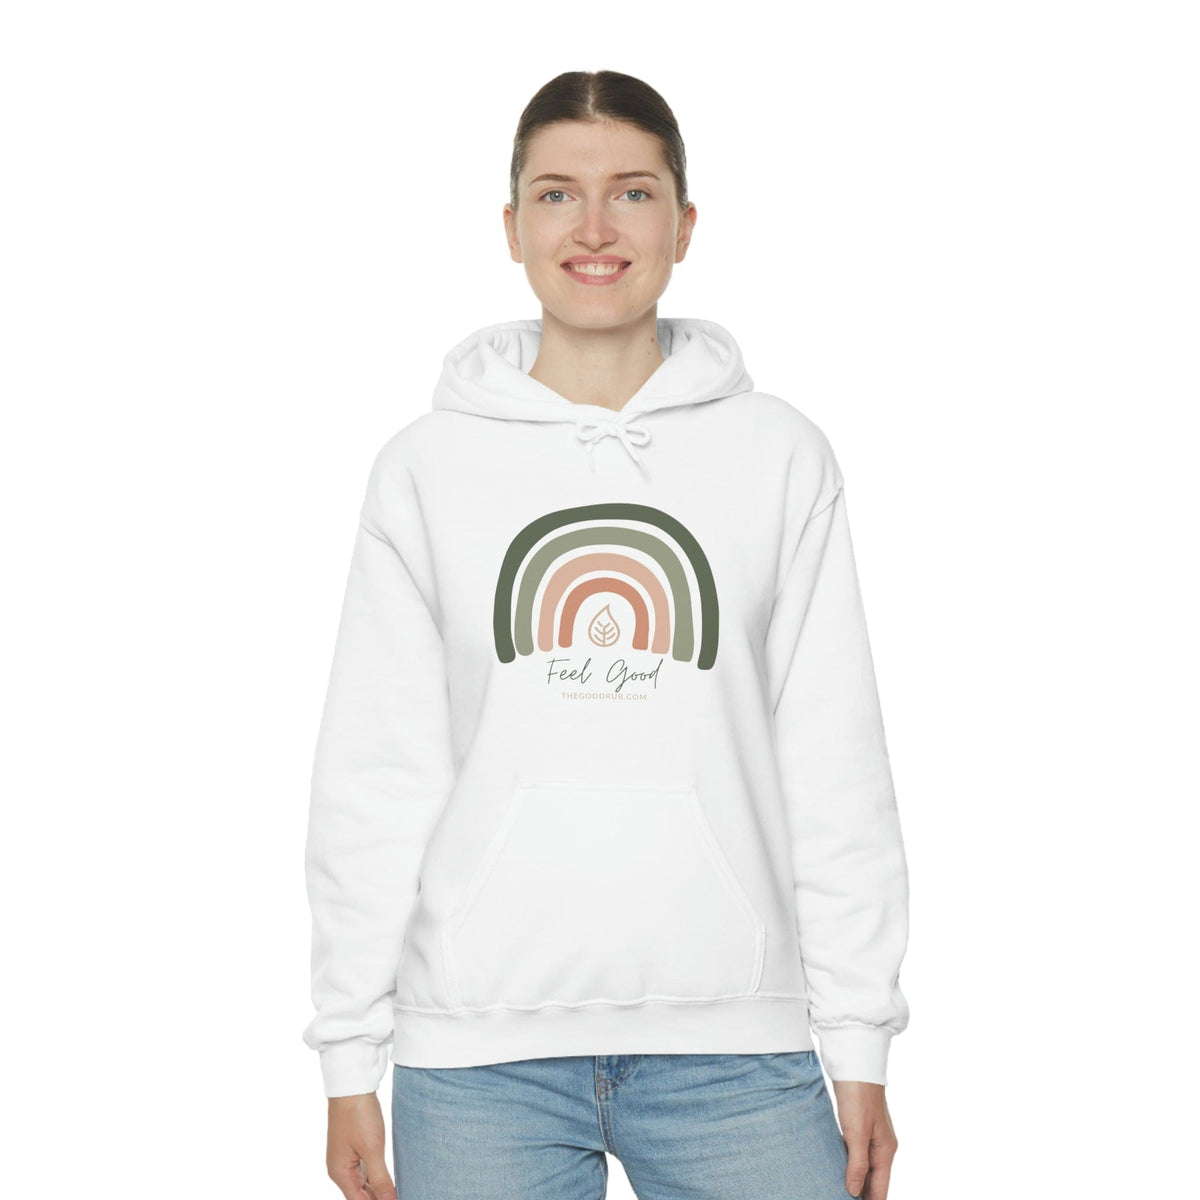 Feel Good Rainbow - Unisex Heavy Blend™ Hooded Sweatshirt - The Good Rub